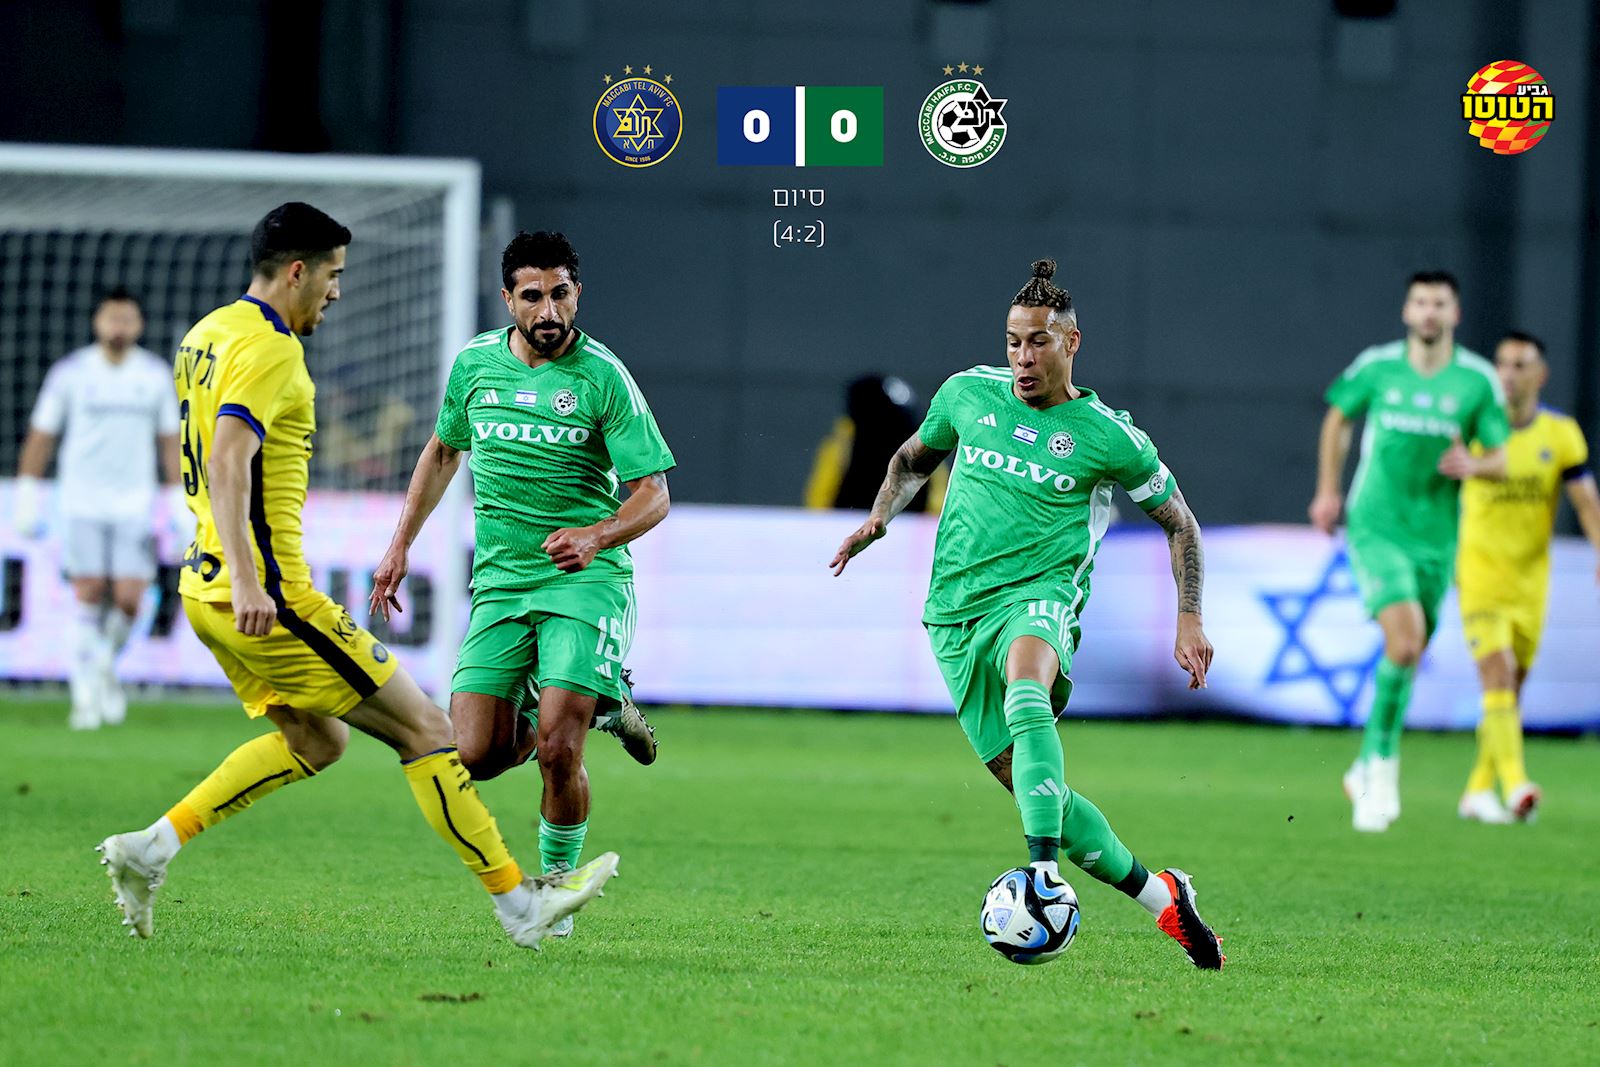 Maccabi Lost the Toto Cup Final